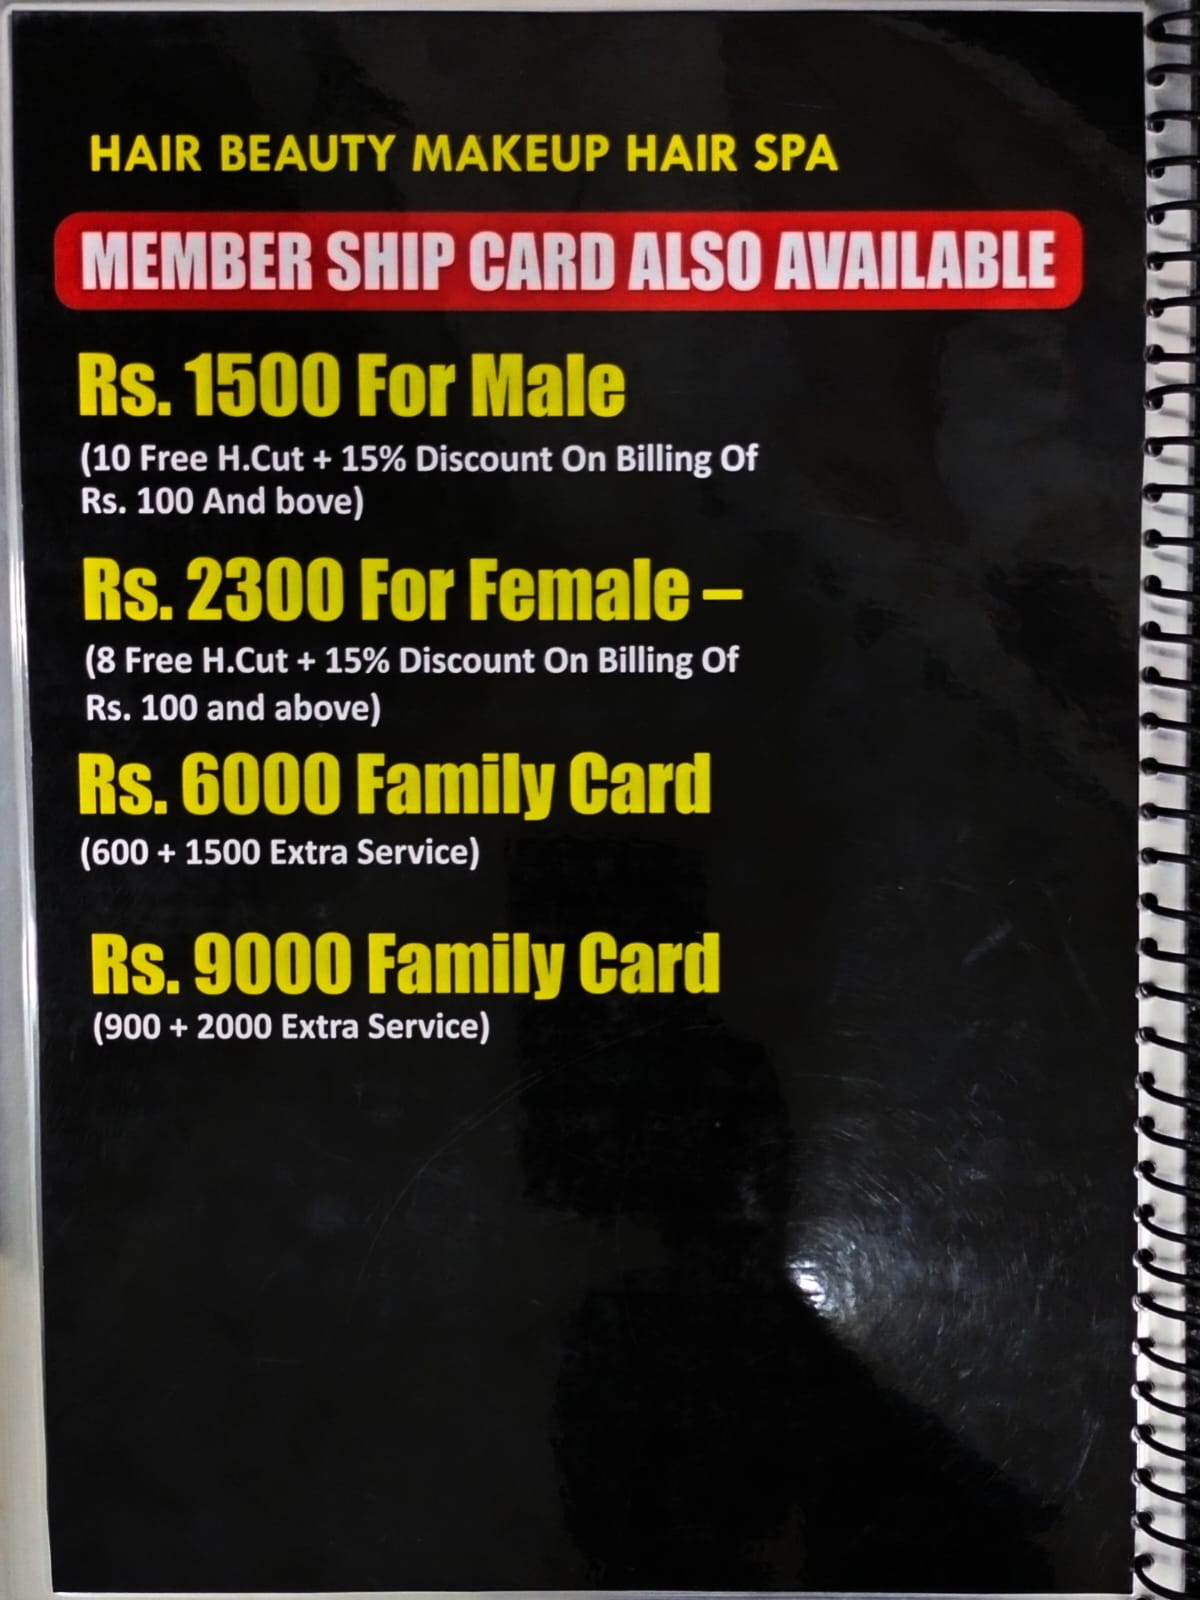 For Male Member Ship Card @